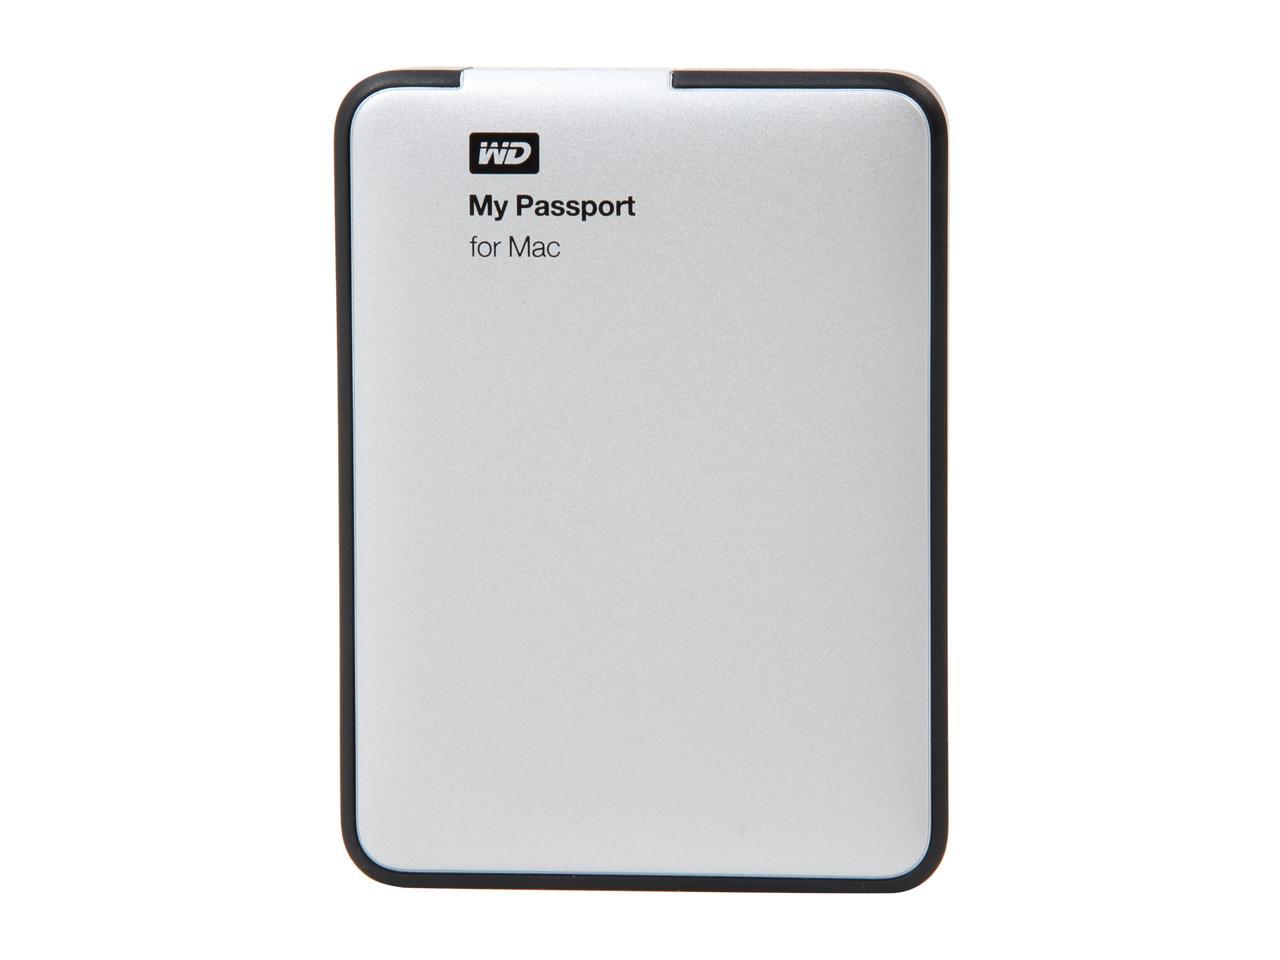 wd my passport for mac 1tb external hard drive